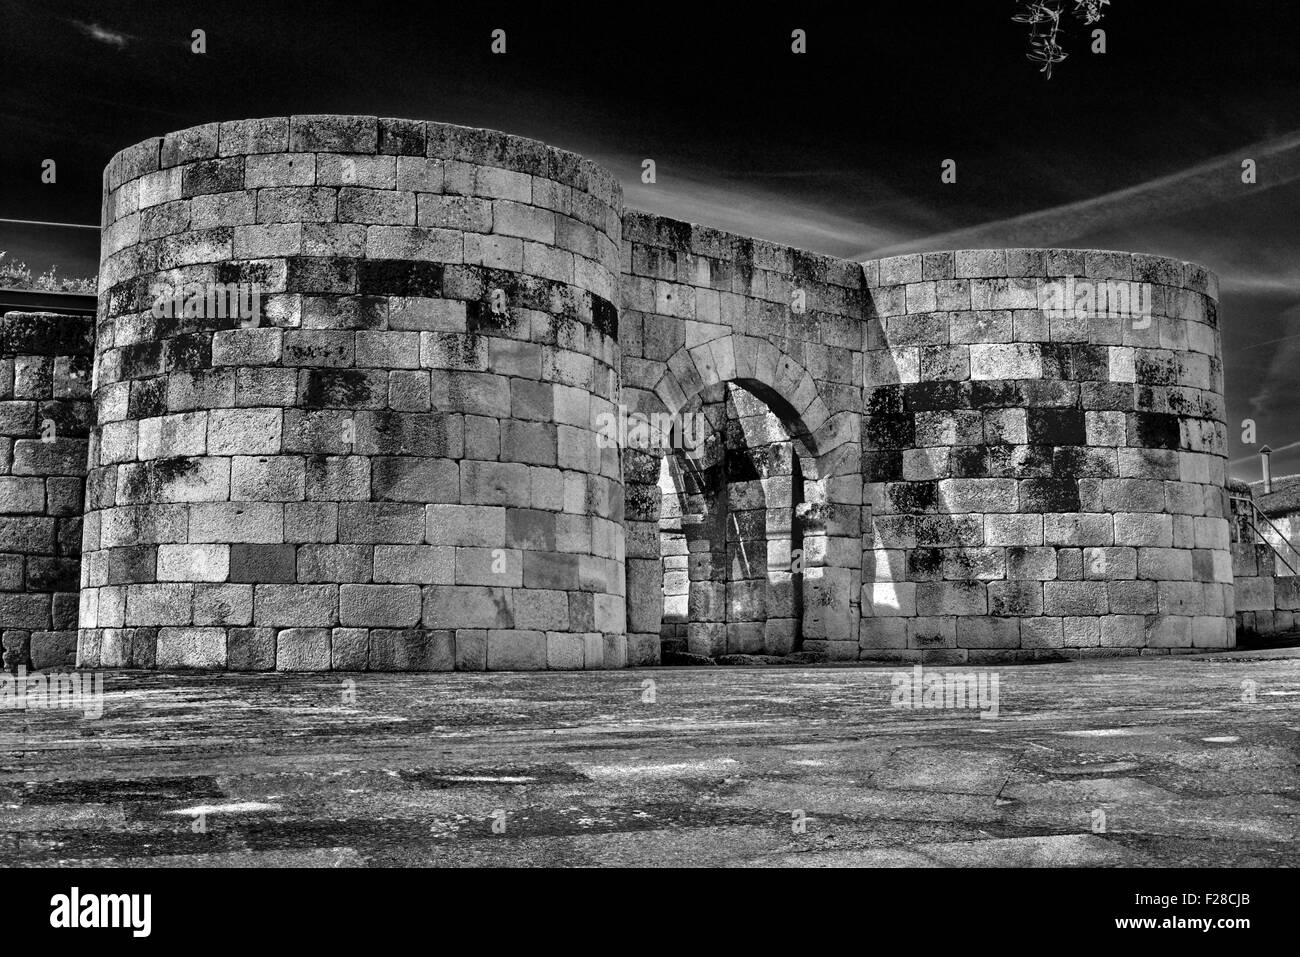 Portugal: Historic gateway of the former roman wall (4th century) in Idanha-a-Velha (bw) Stock Photo